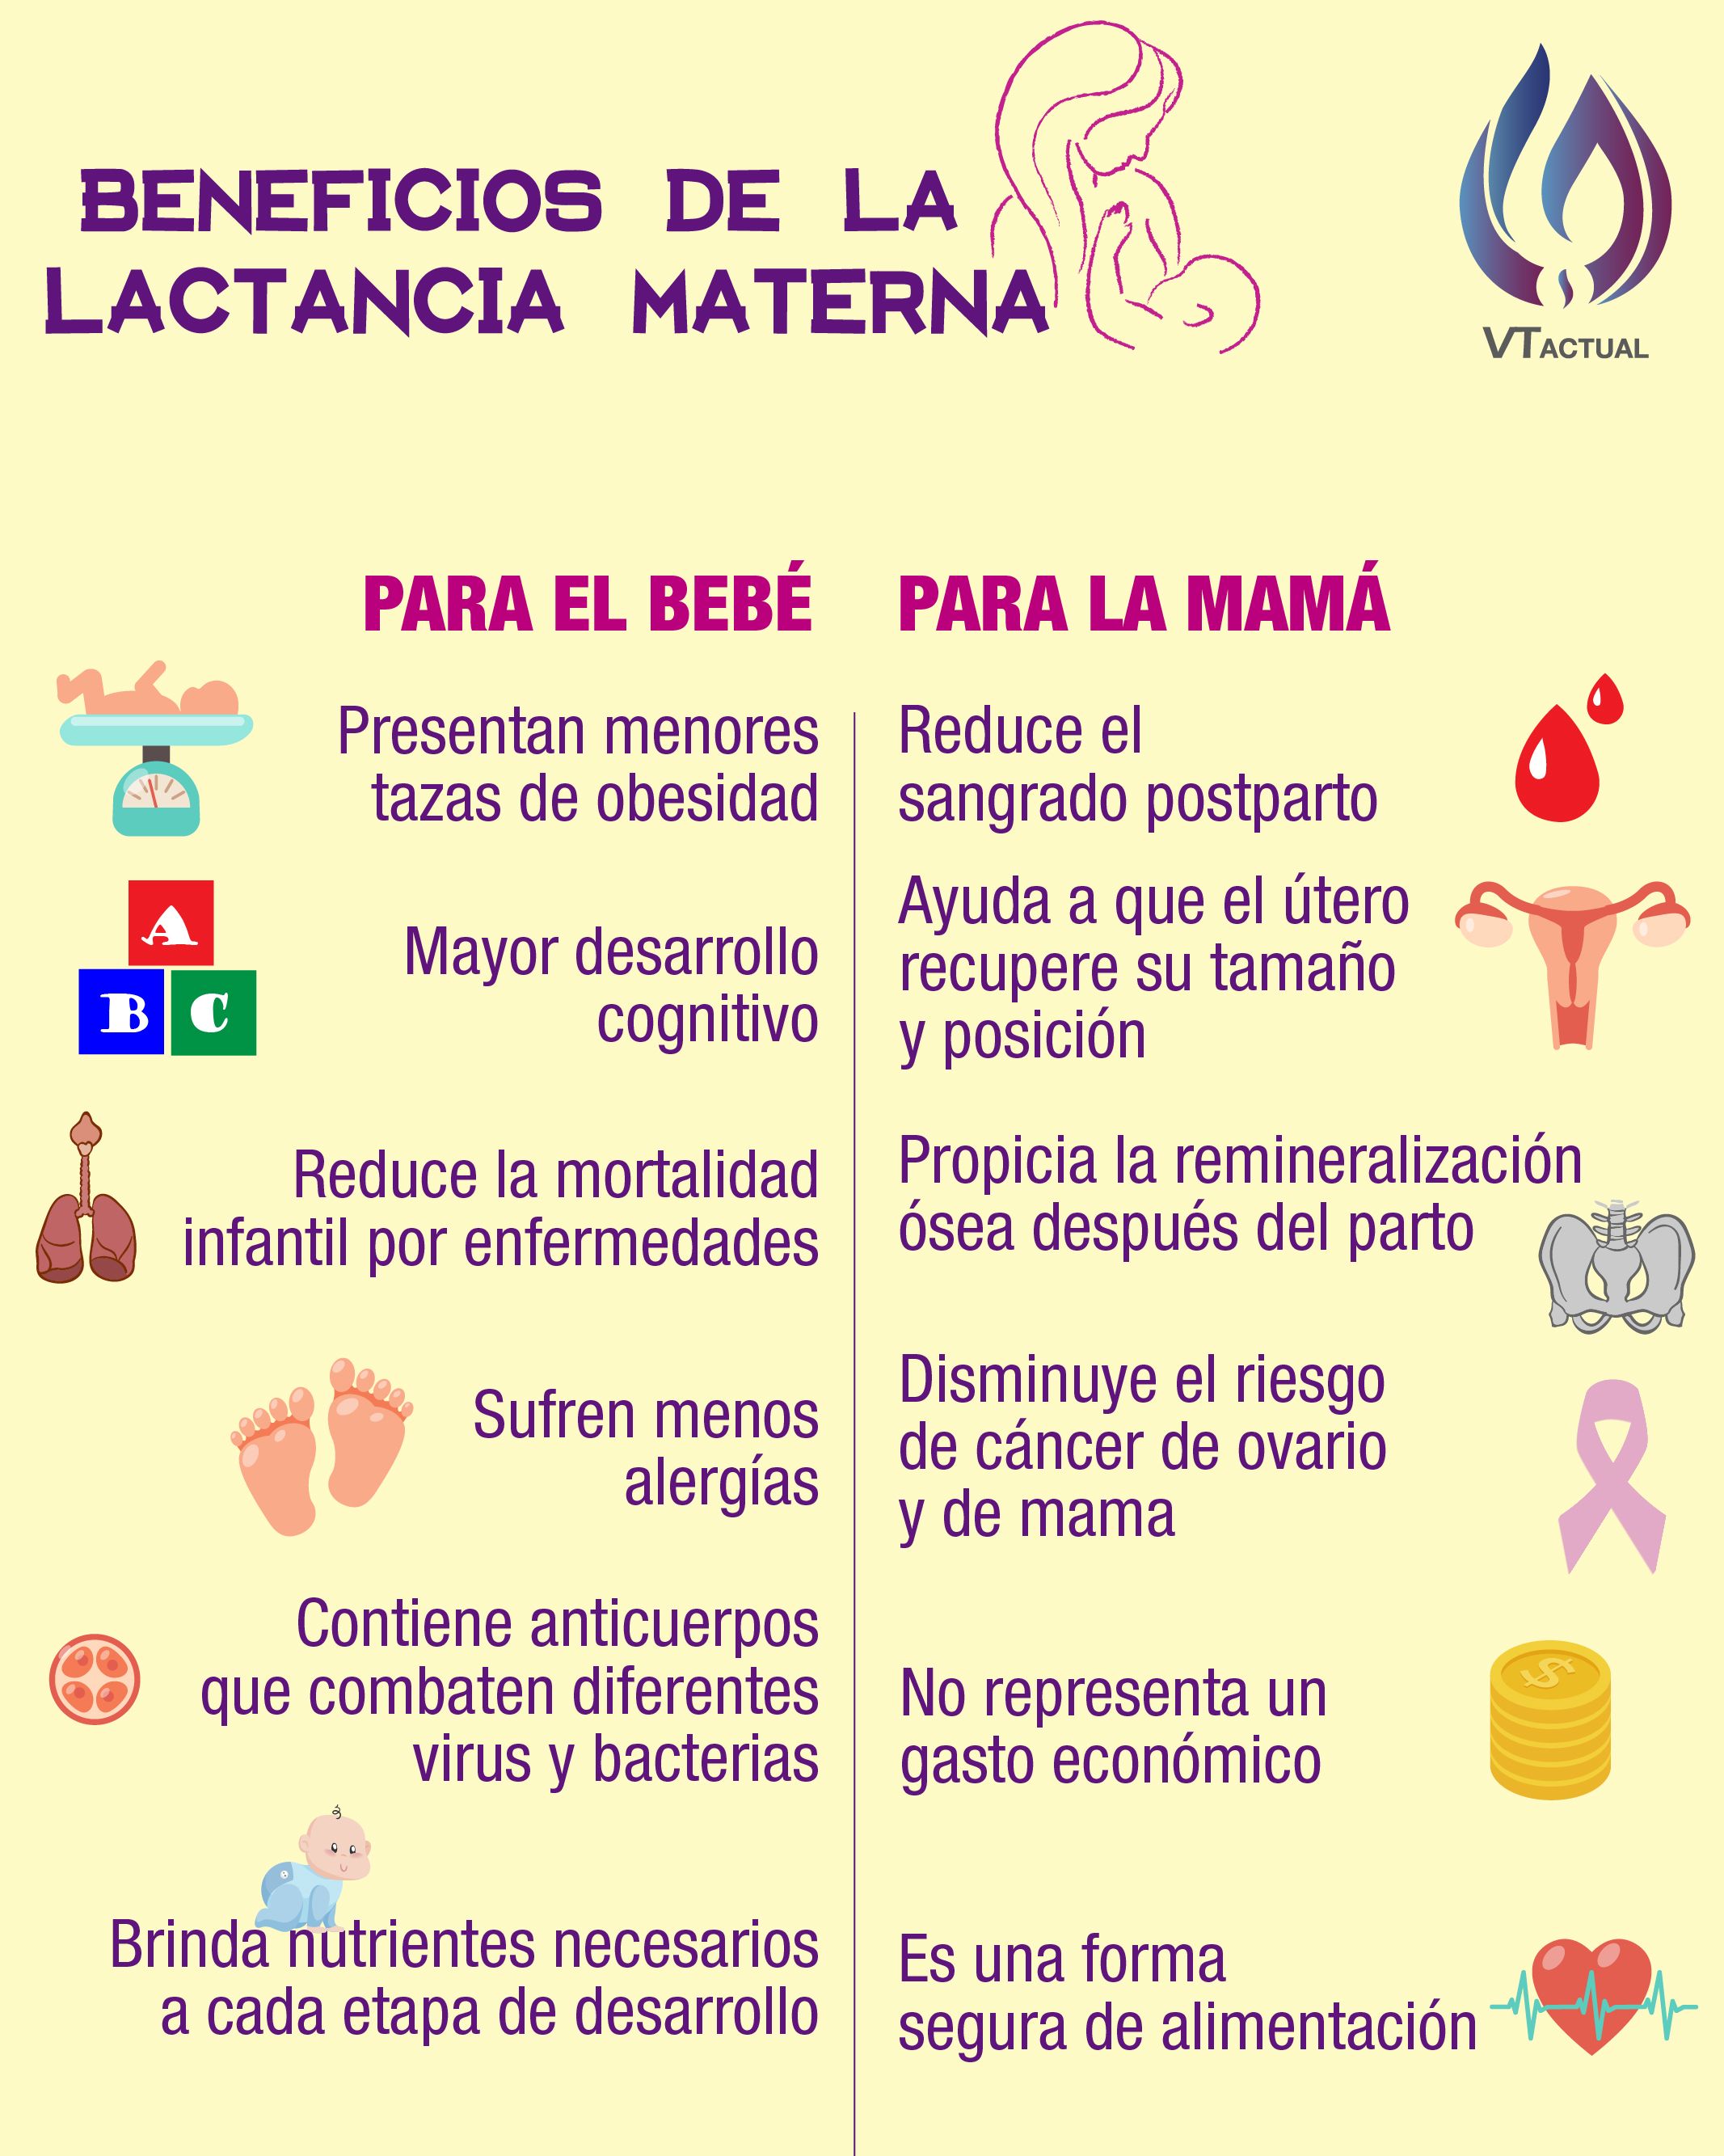 Portero Aditivo Perceptible Beneficios de la lactancia materna - Farmacia Barco